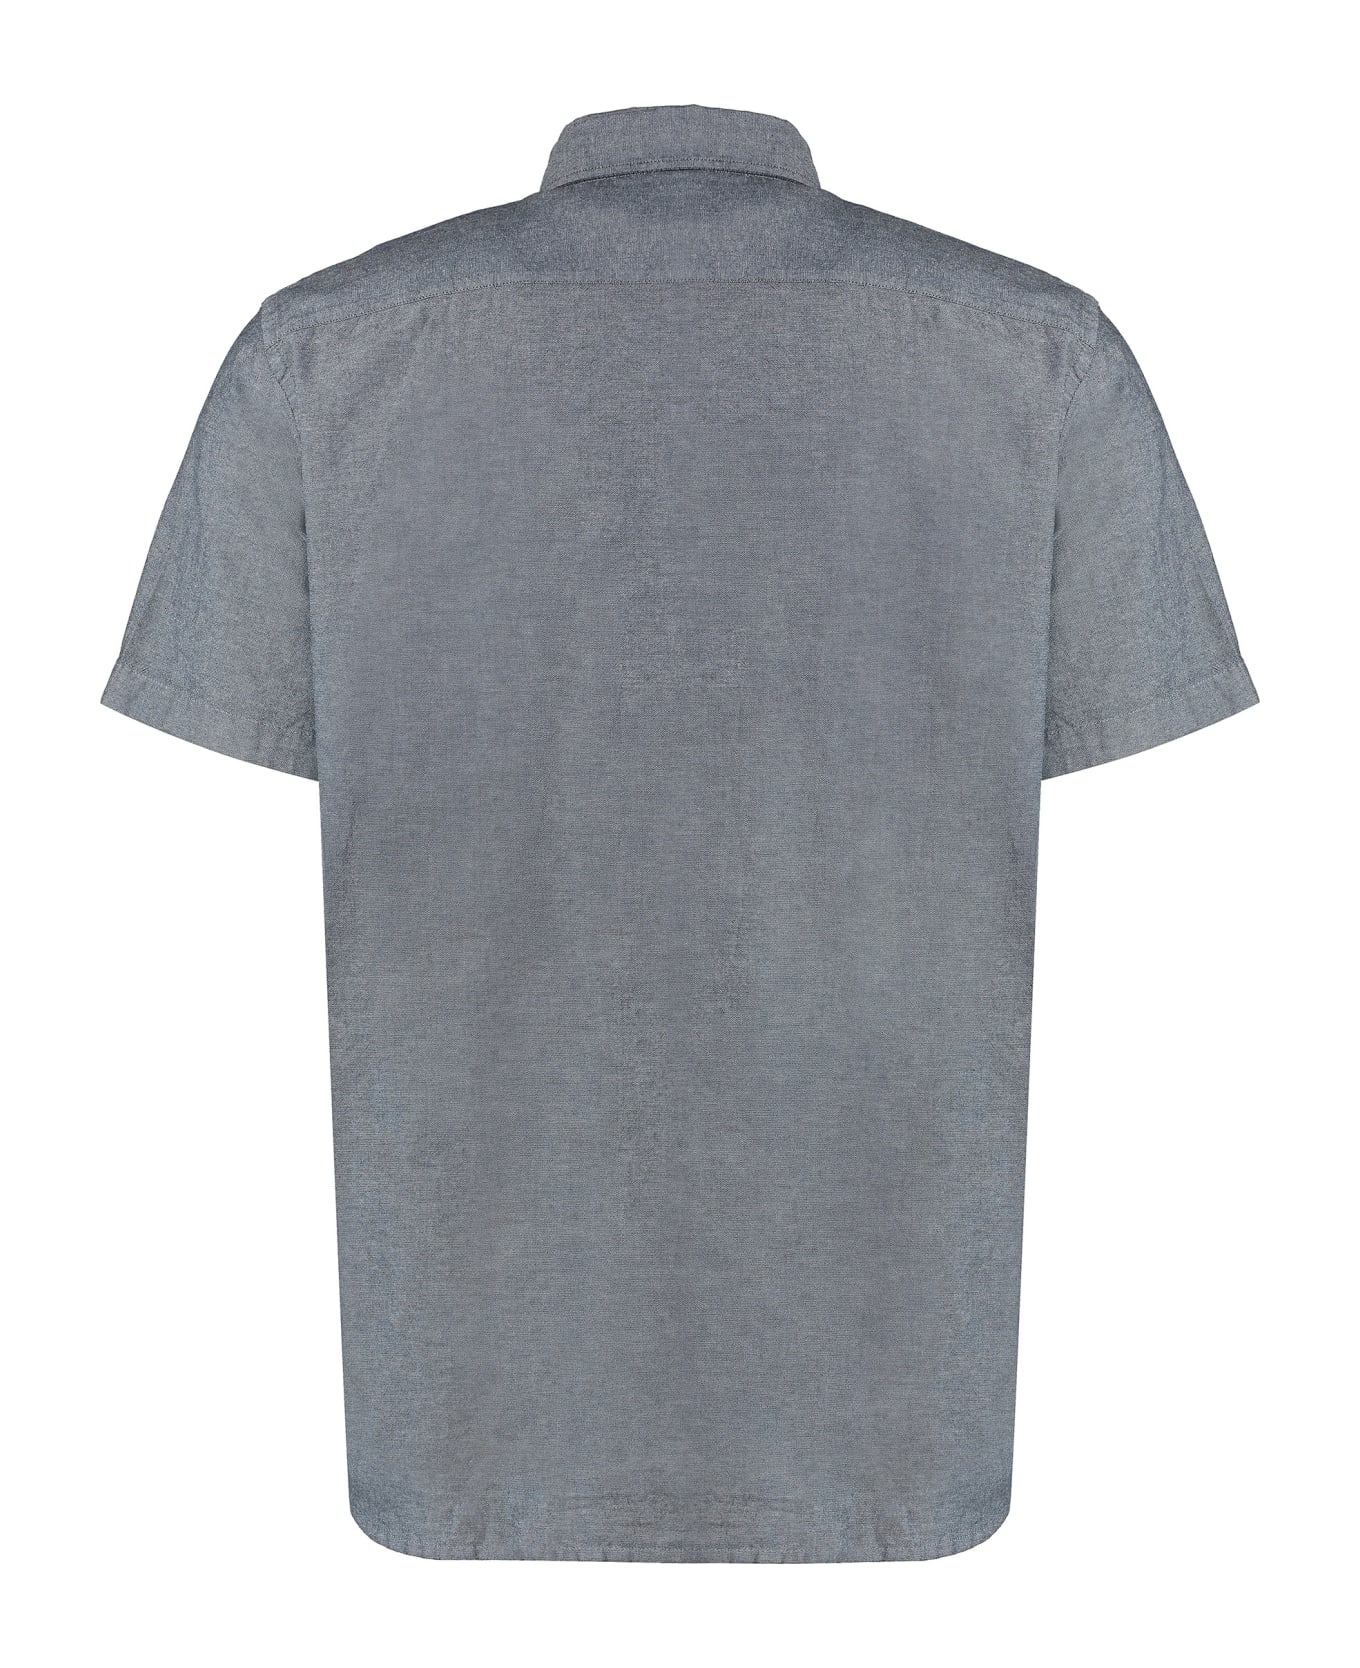 Hugo Boss Short Sleeve Cotton Shirt - grey